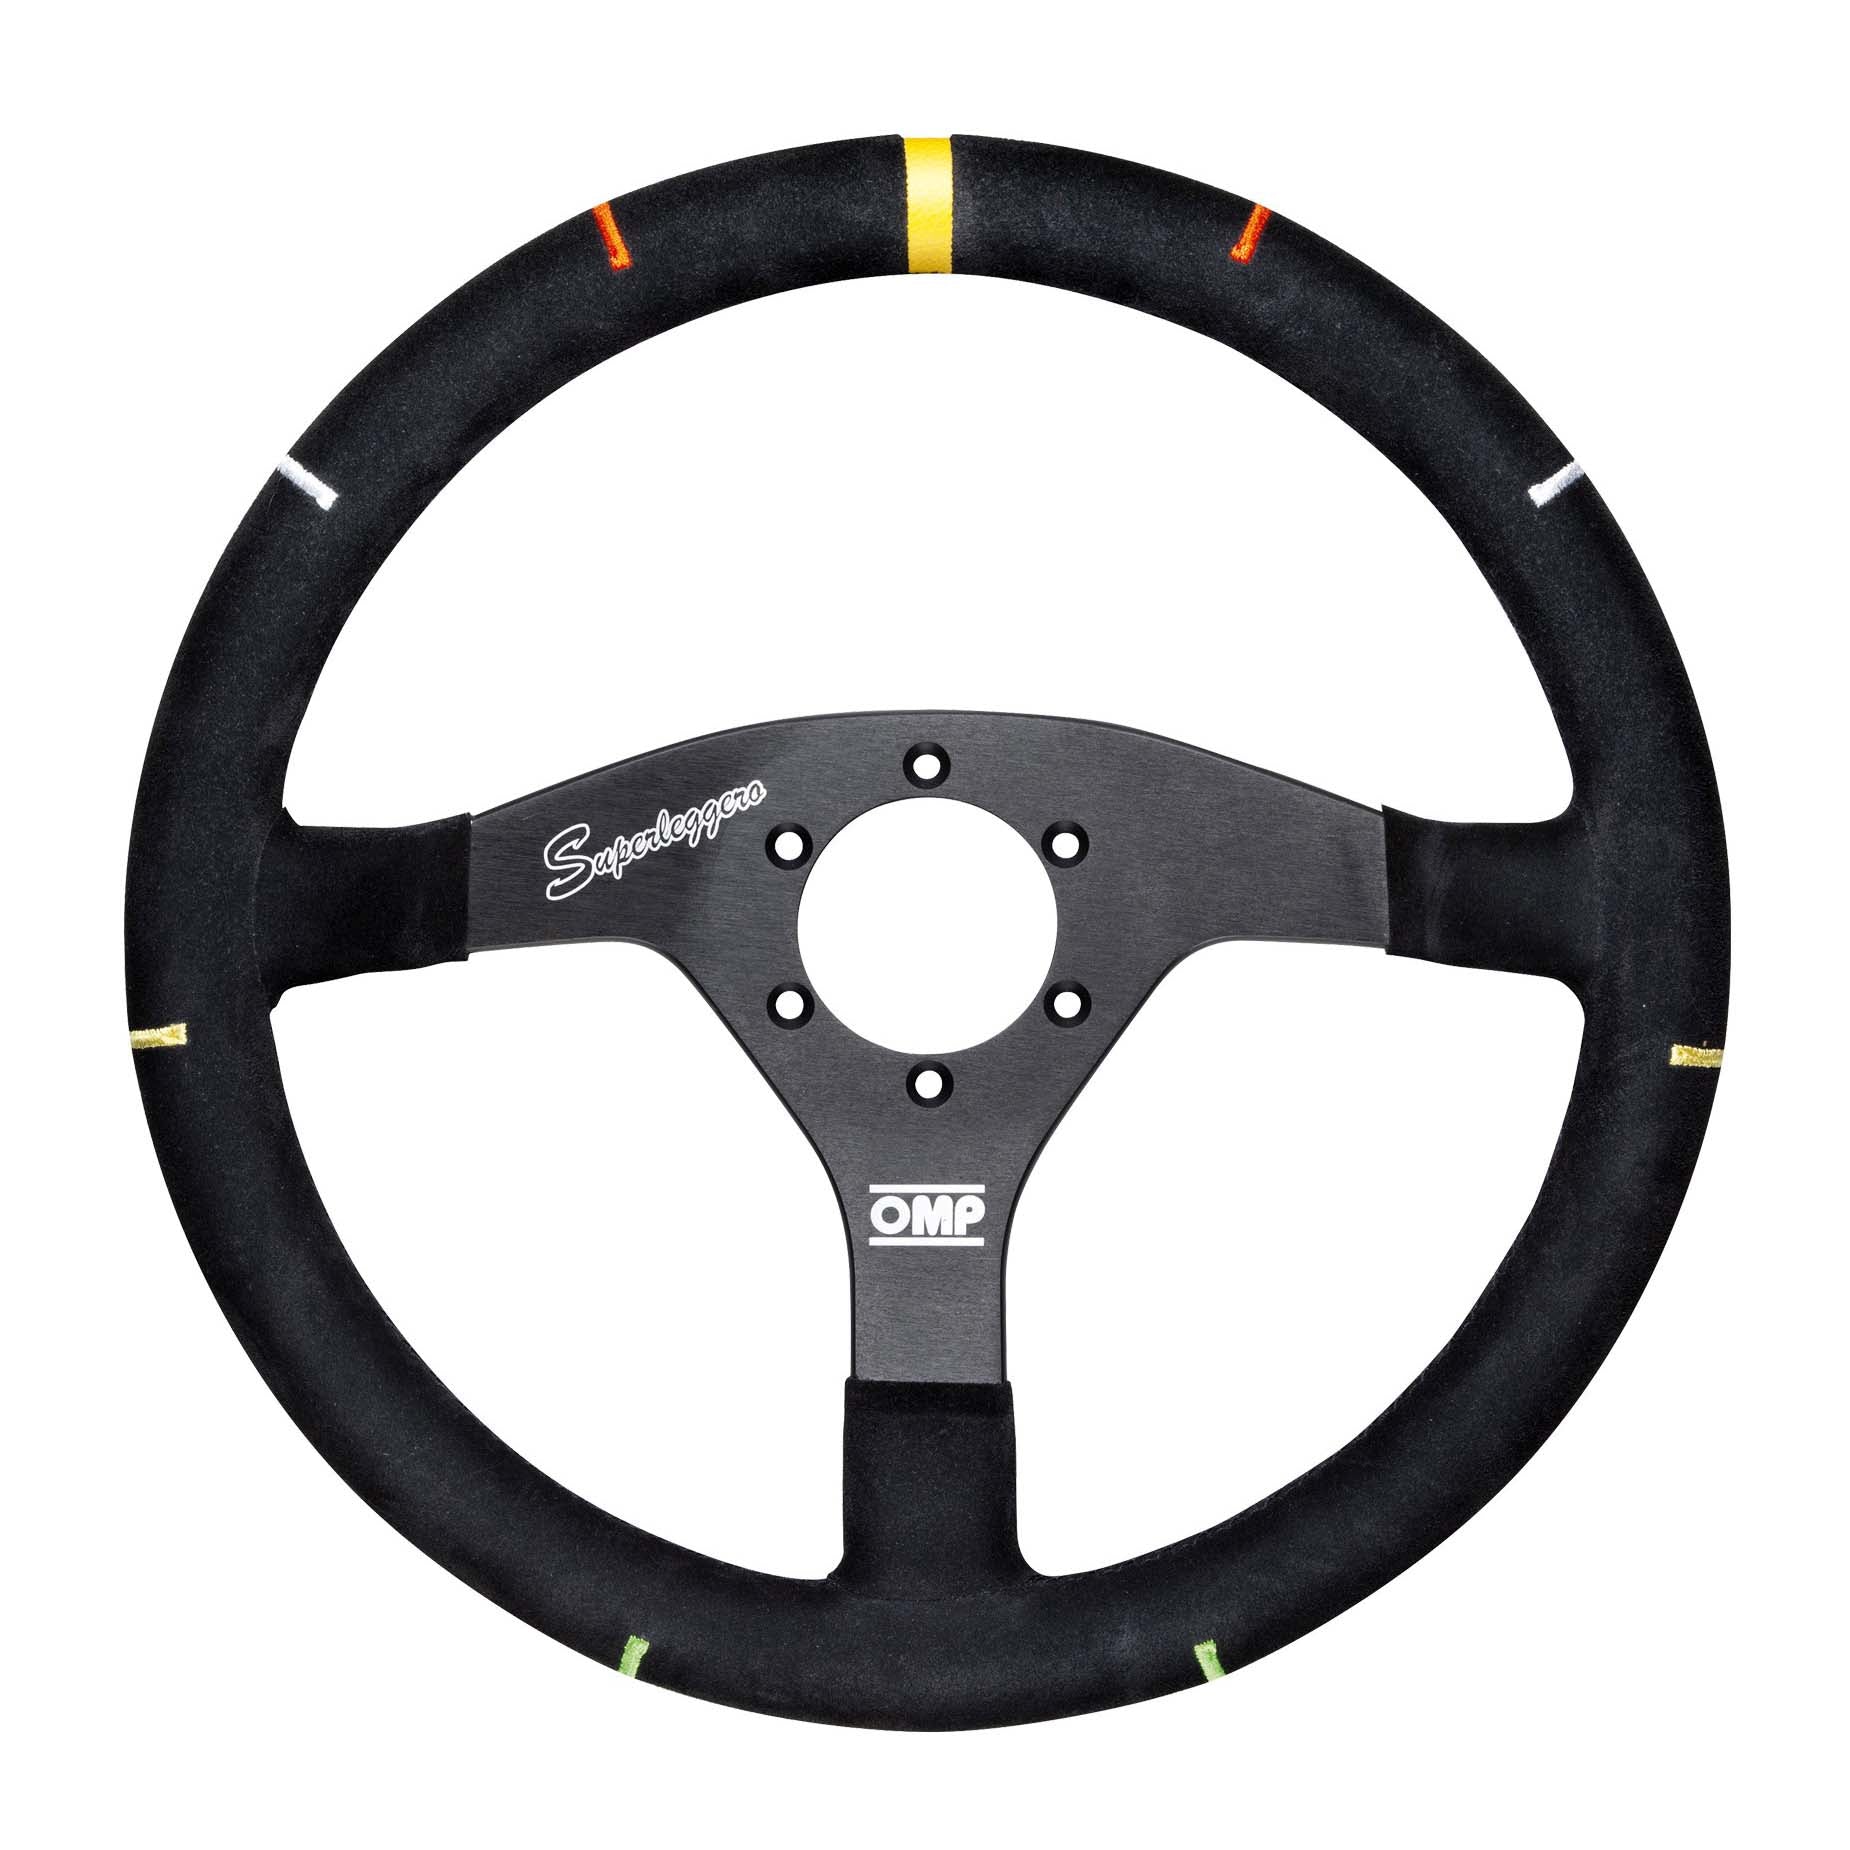 OMP Recce Steering Wheel